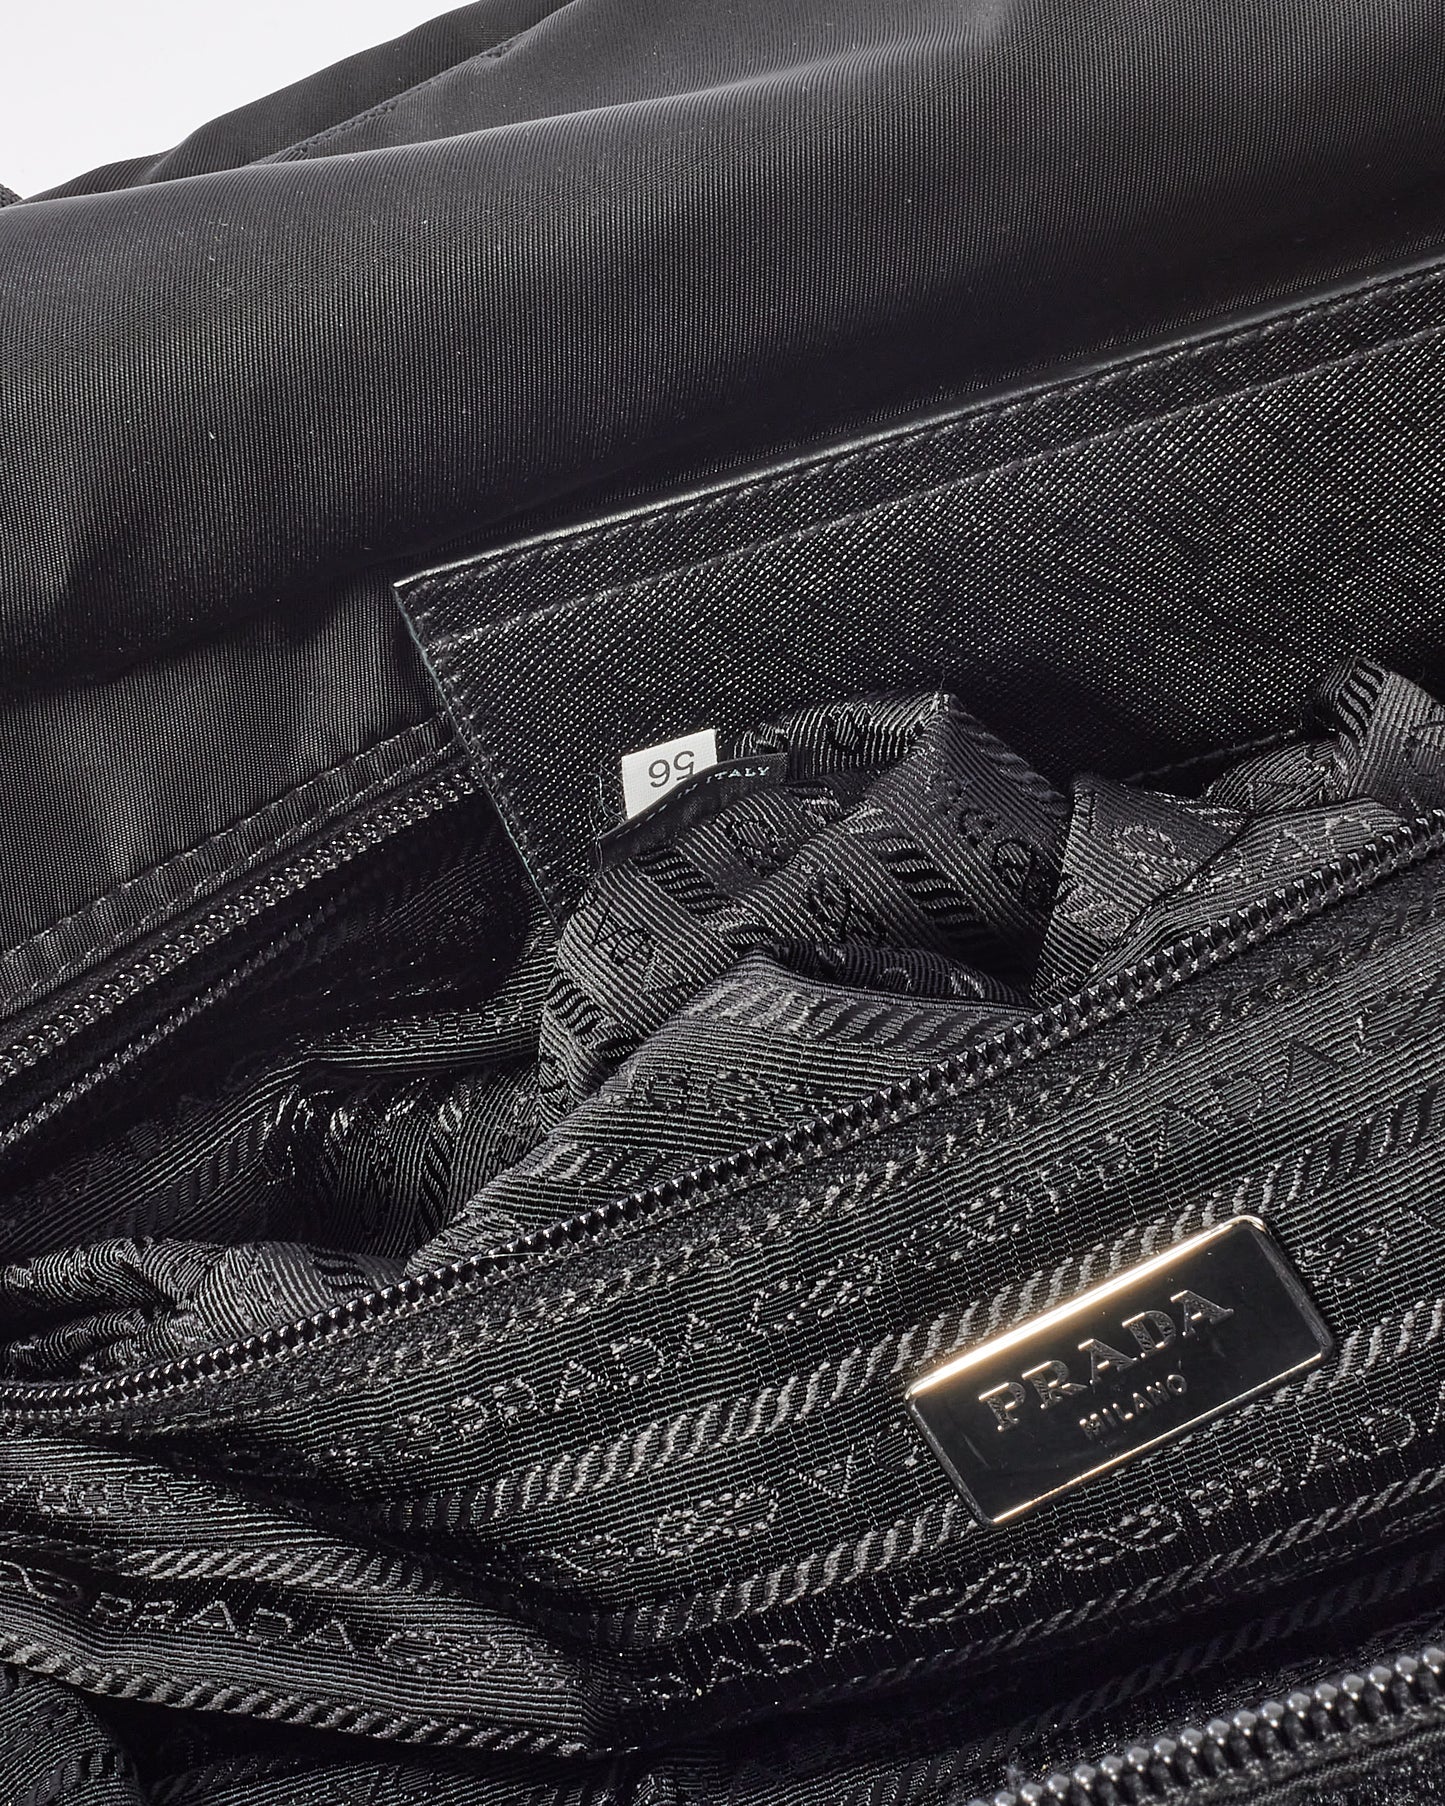 Prada Black Nylon Large Travel Duffle Bag